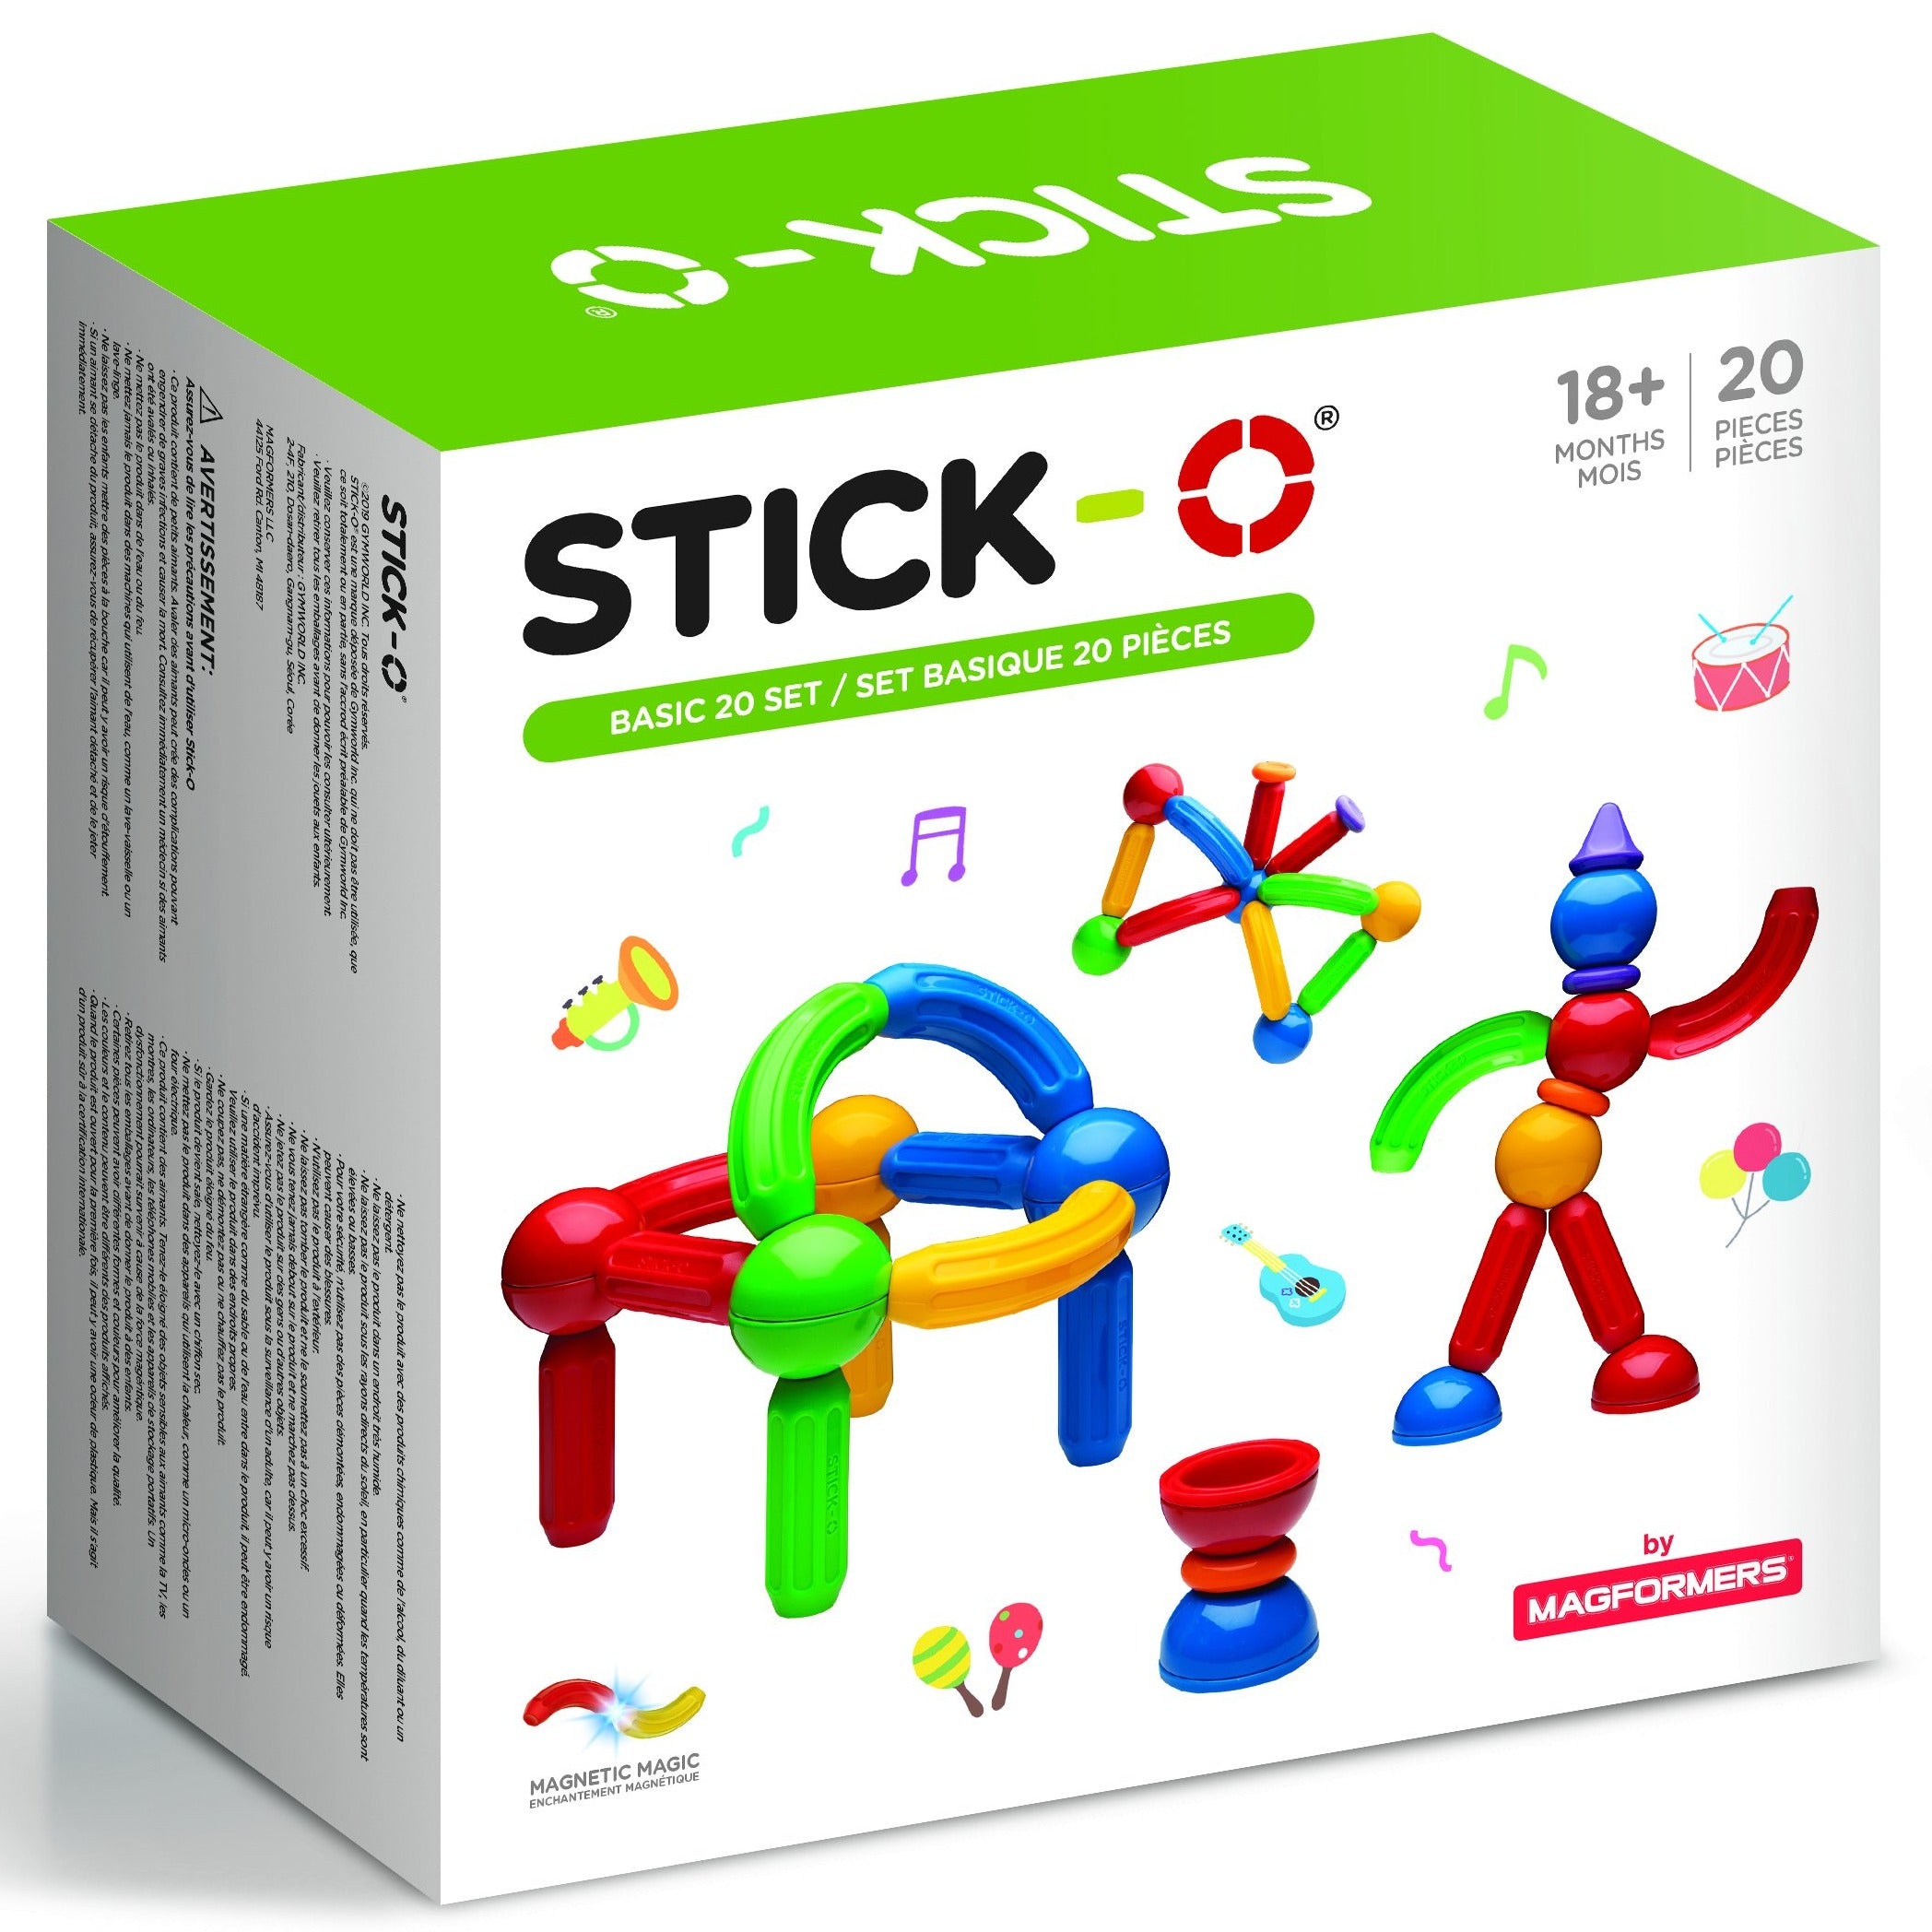 Stick-O - Basic Magnetic Building Set (20pc)